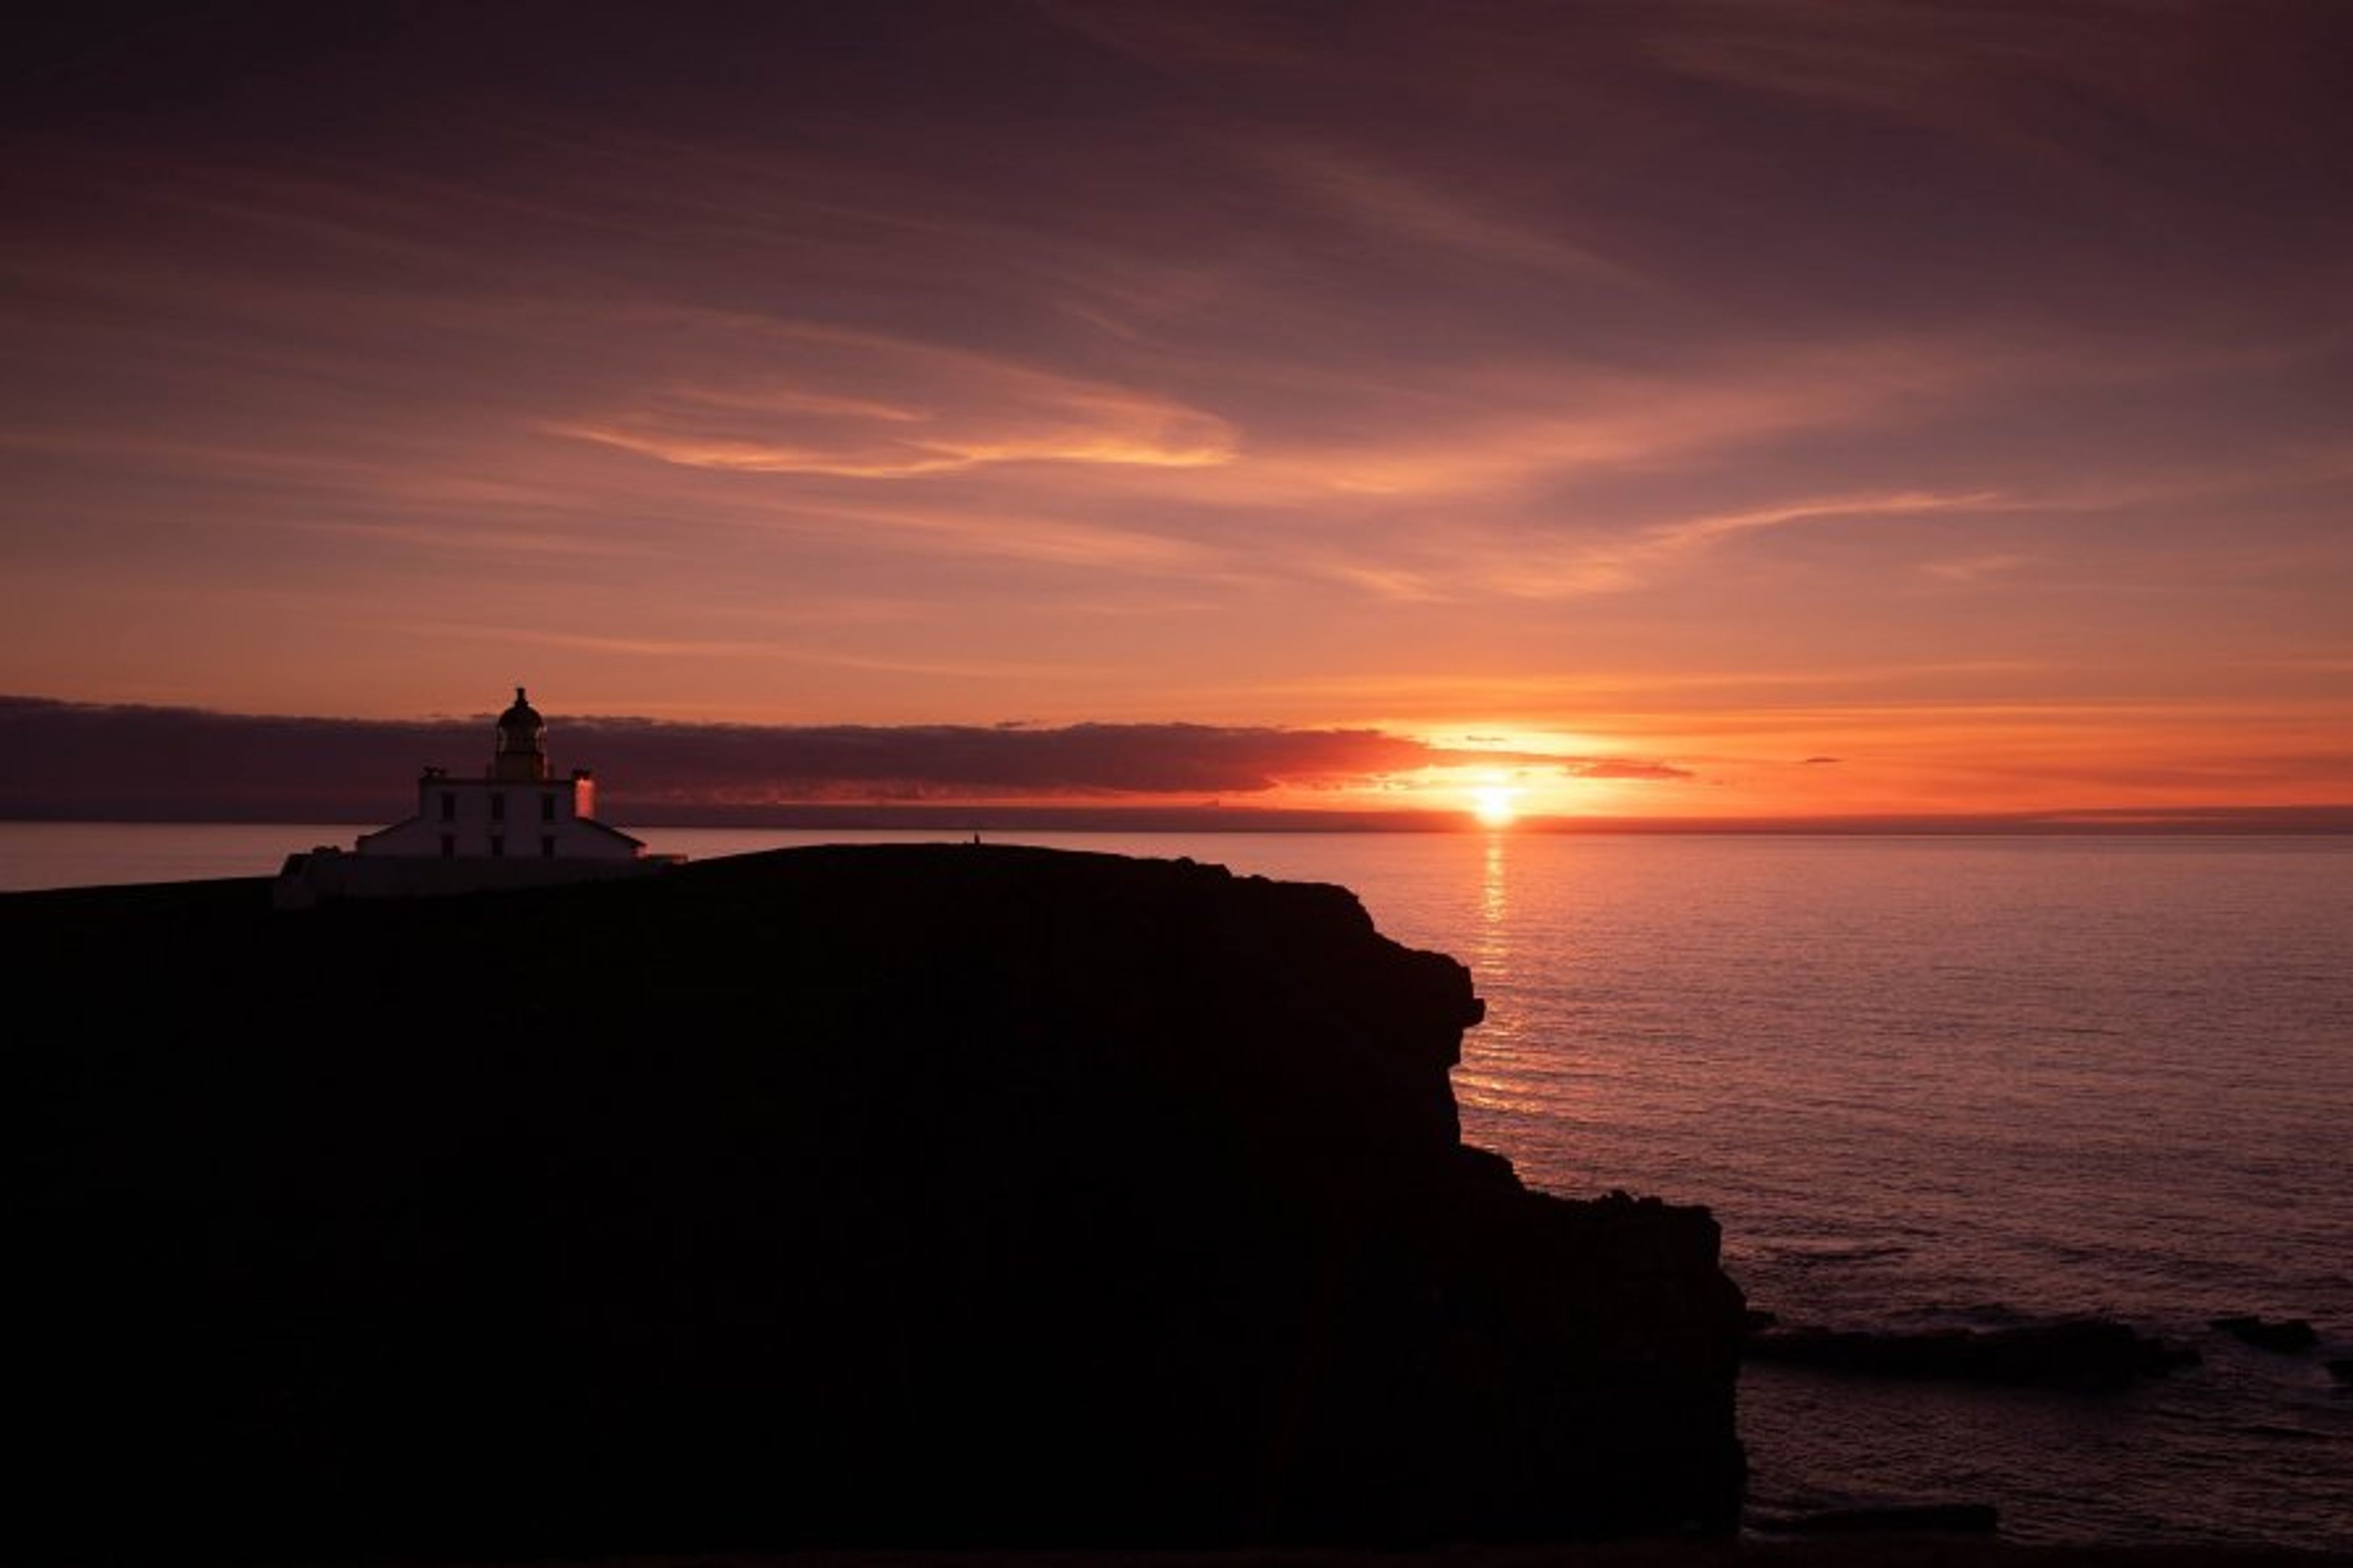 Stoer lighthouse sunset, 5 minute drive